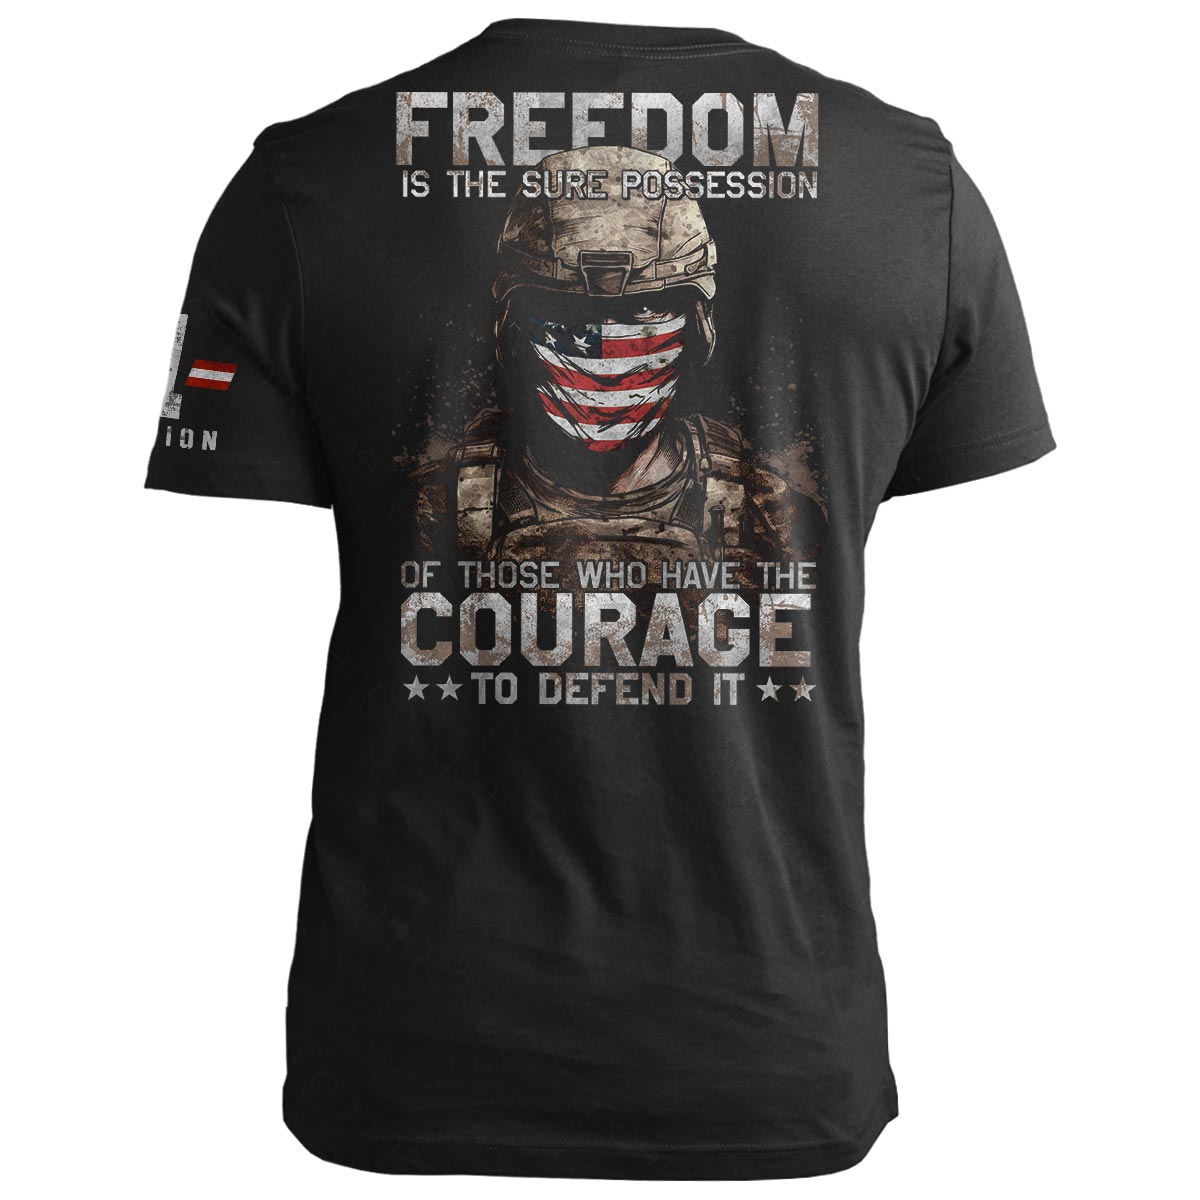 Freedom, Courage